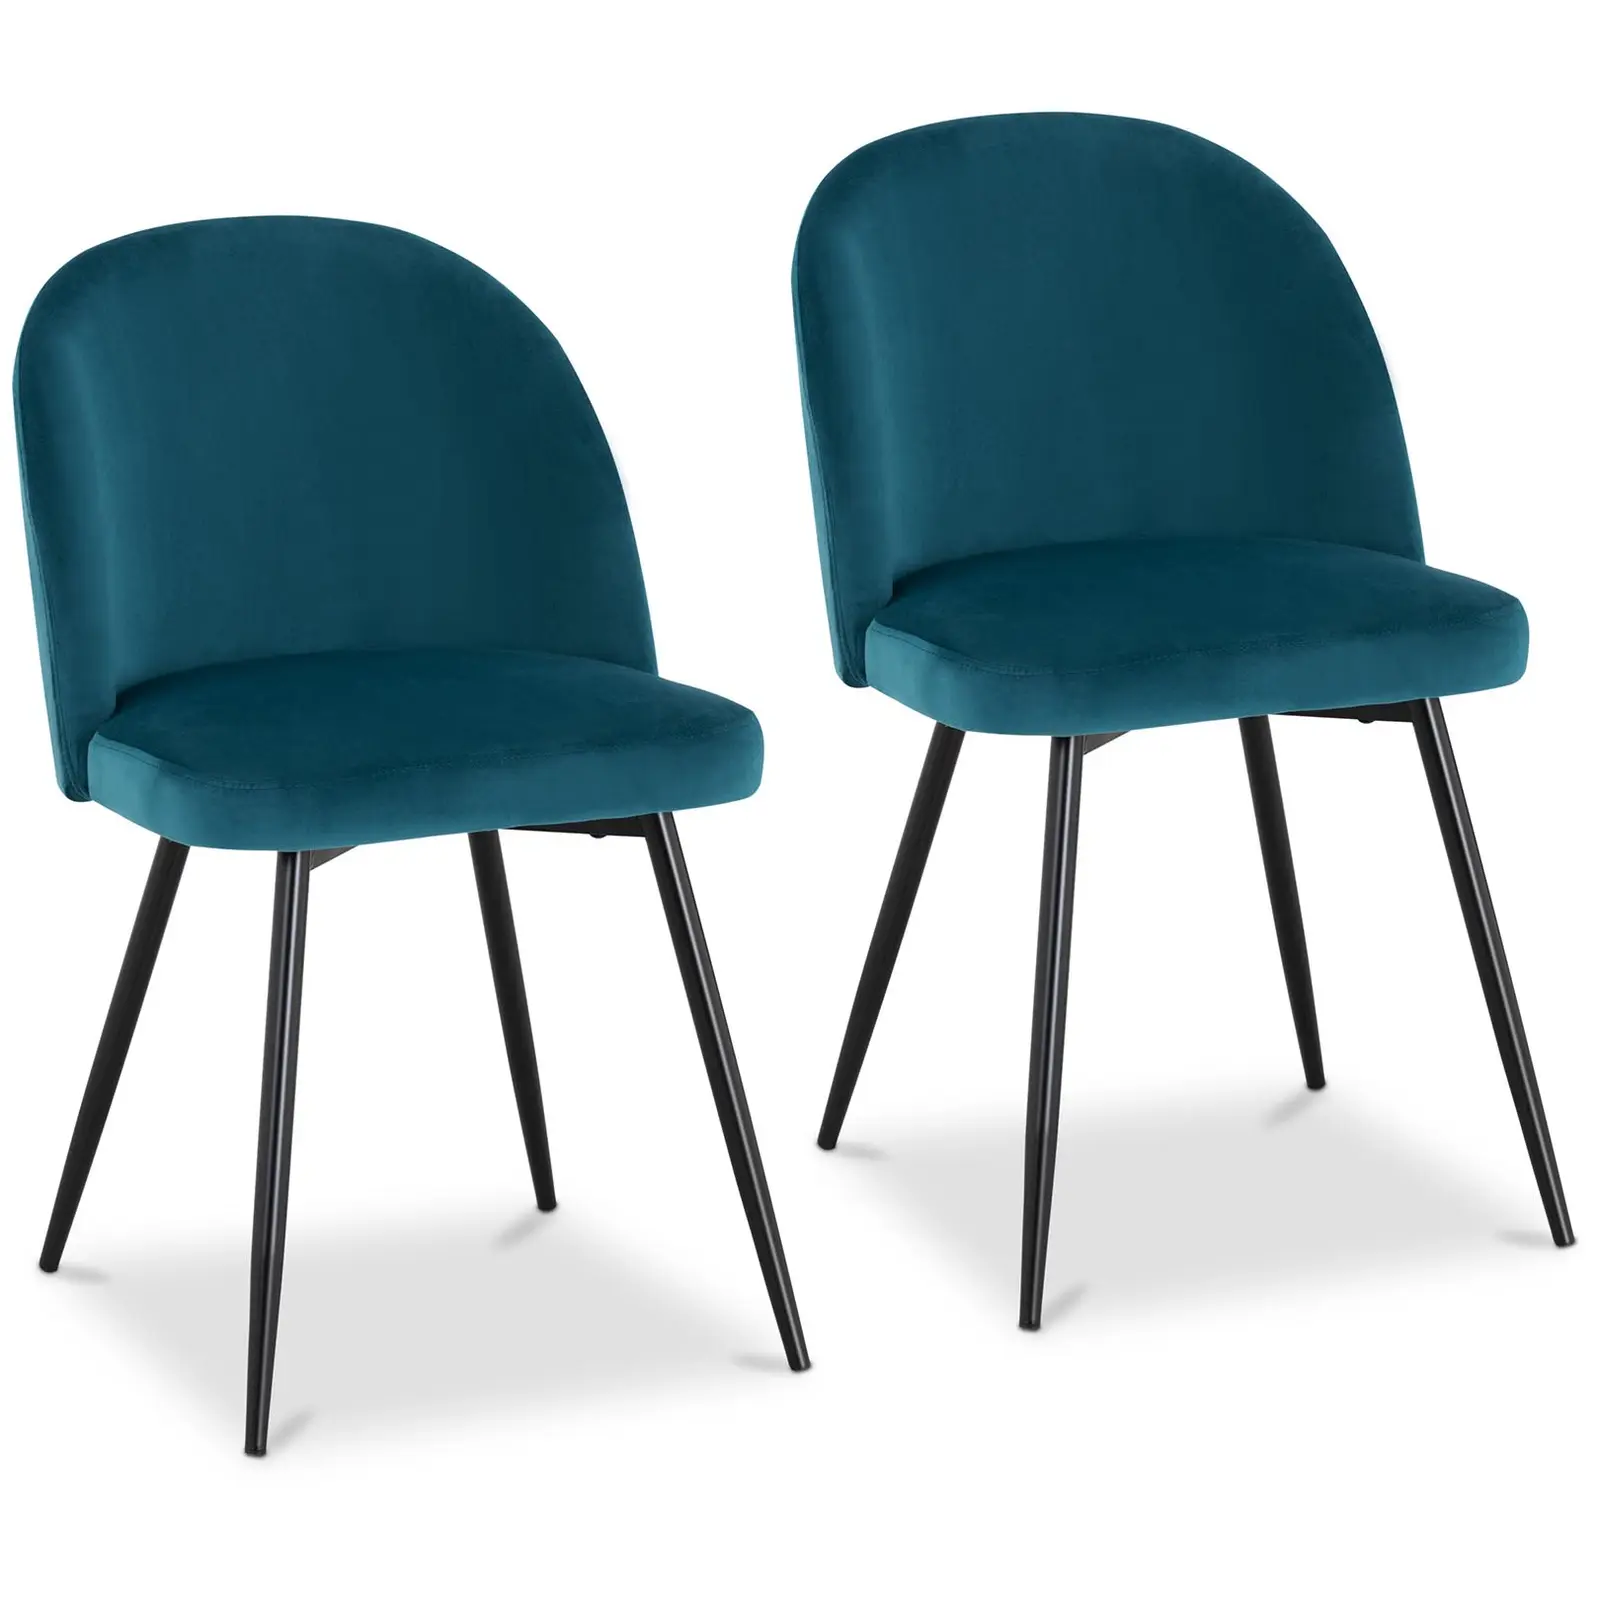 Čalúnená stolička - súprava 2 ks - do 150 kg - sedadlo 48 x 41,5 cm - tyrkysová